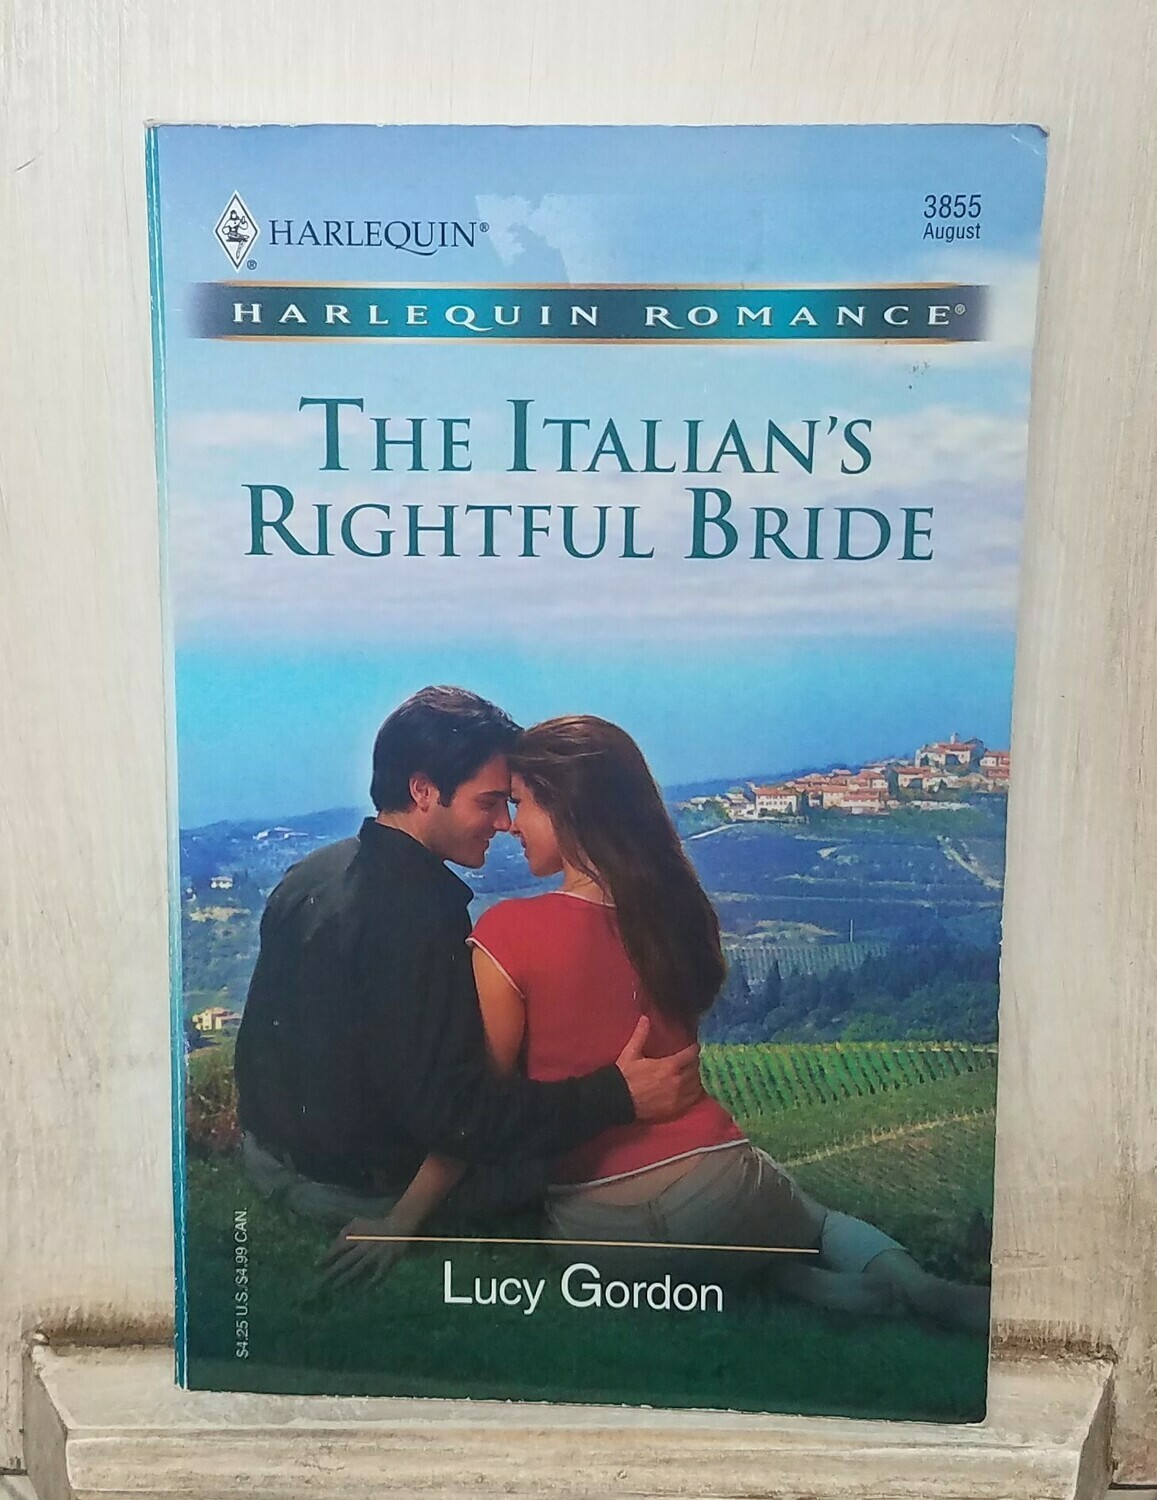 The Italian's Rightful Bride by Lucy Gordon